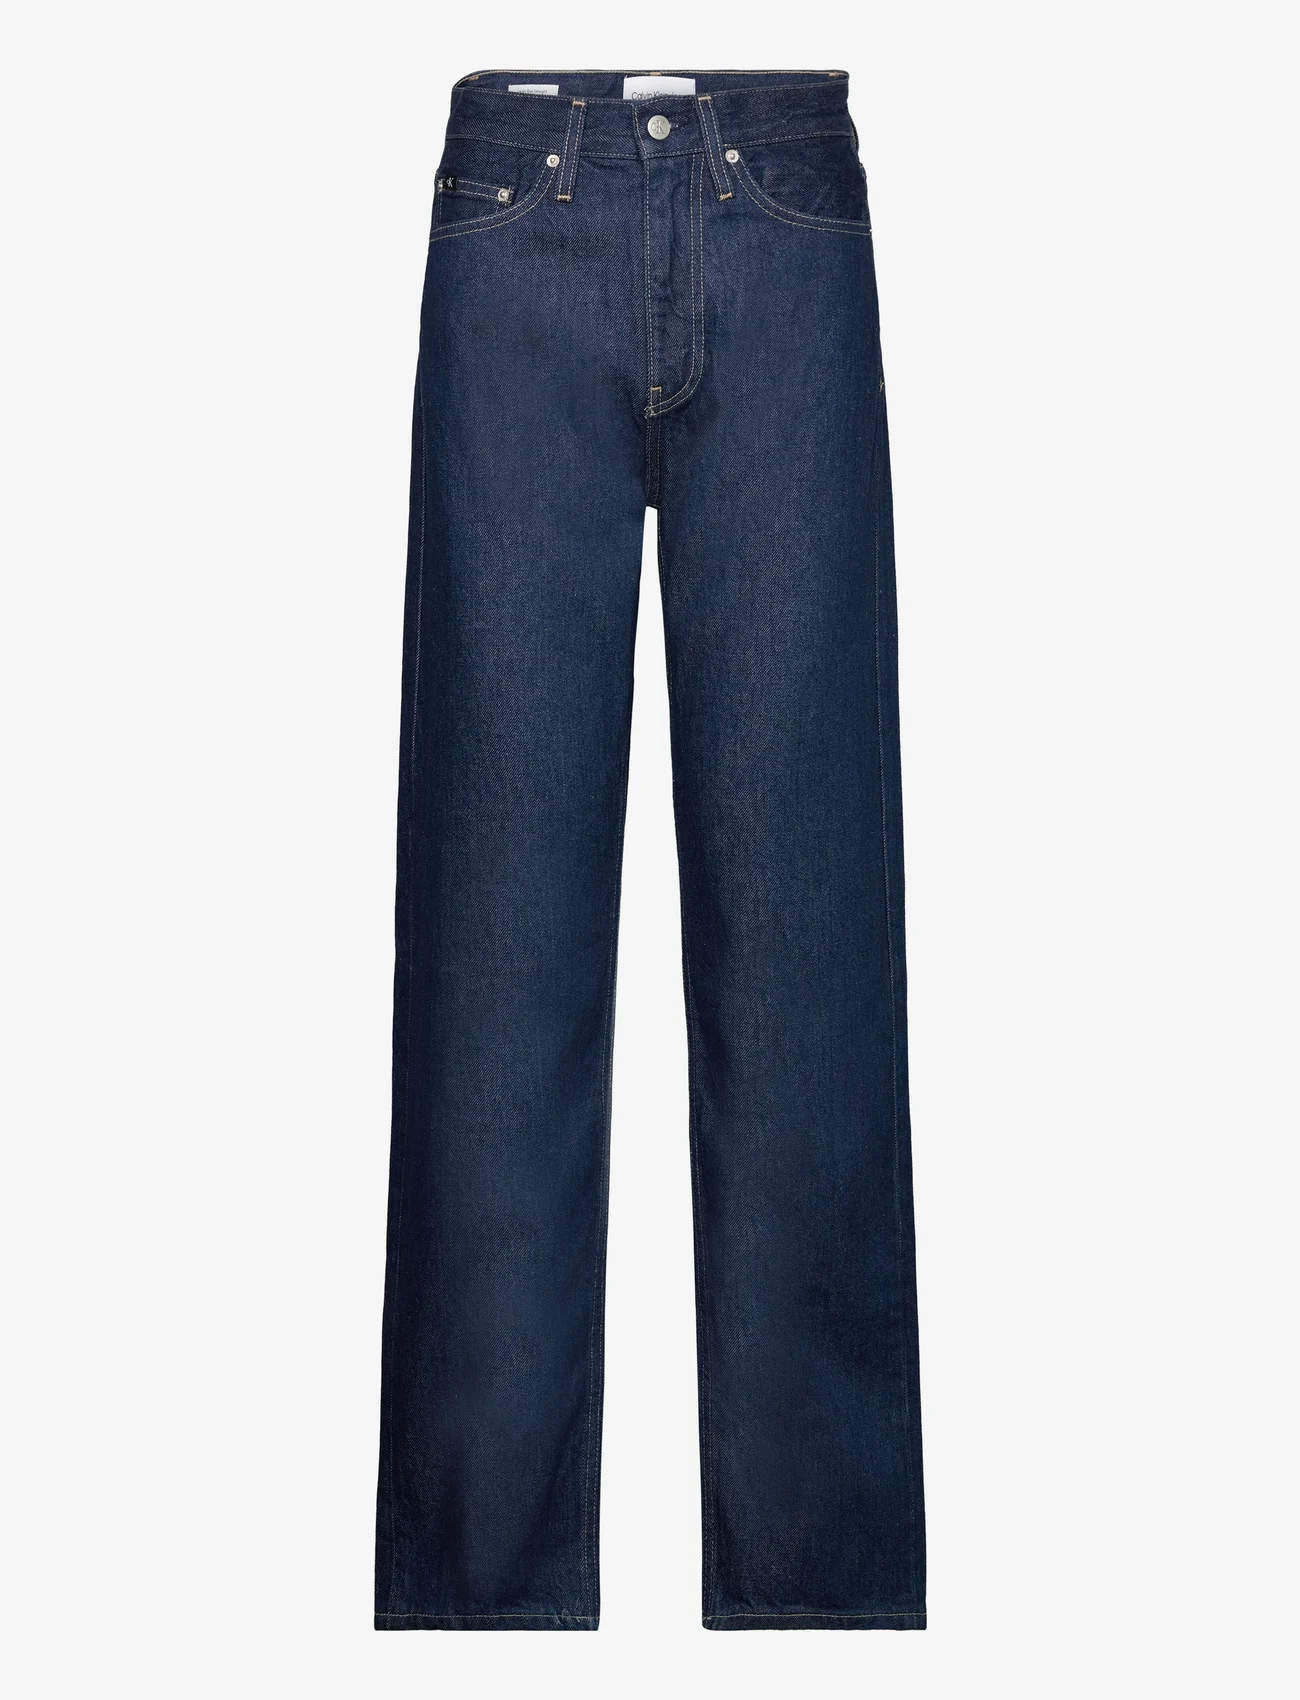 Calvin Klein Jeans - HIGH RISE STRAIGHT - straight jeans - denim rinse - 0